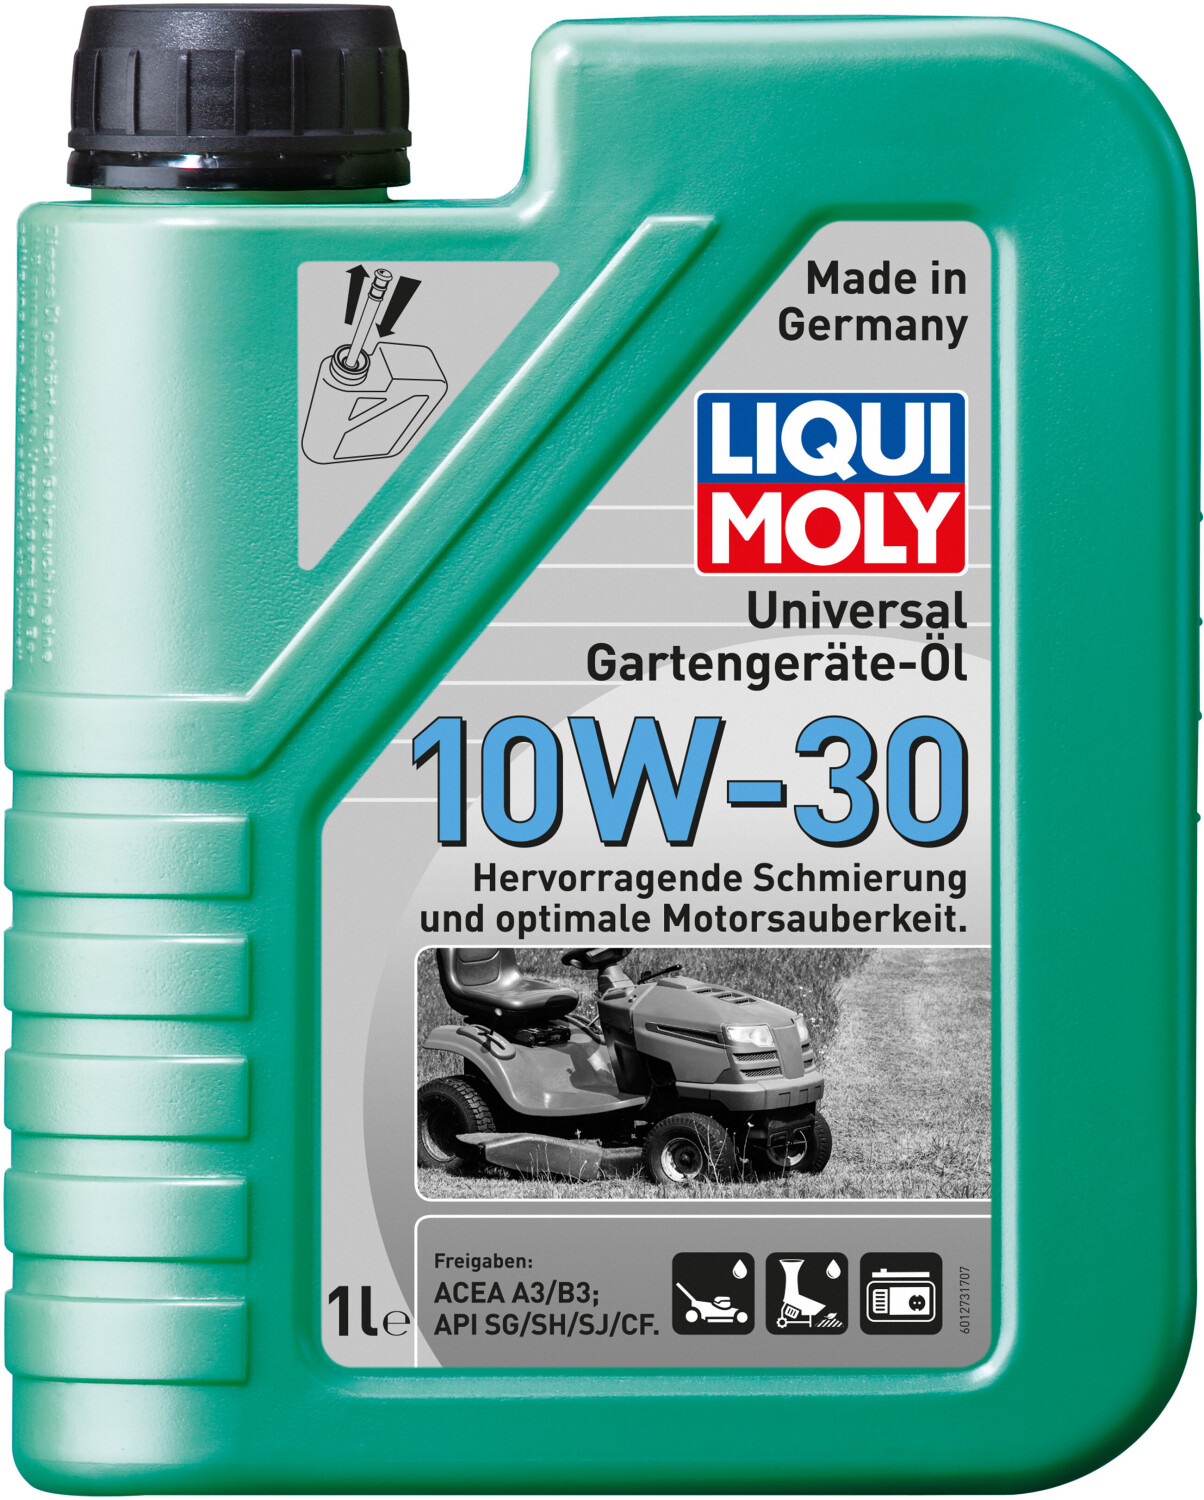 LIQUI MOLY Universal Gartengeräte-Öl 10 W-30 ab € 9,35